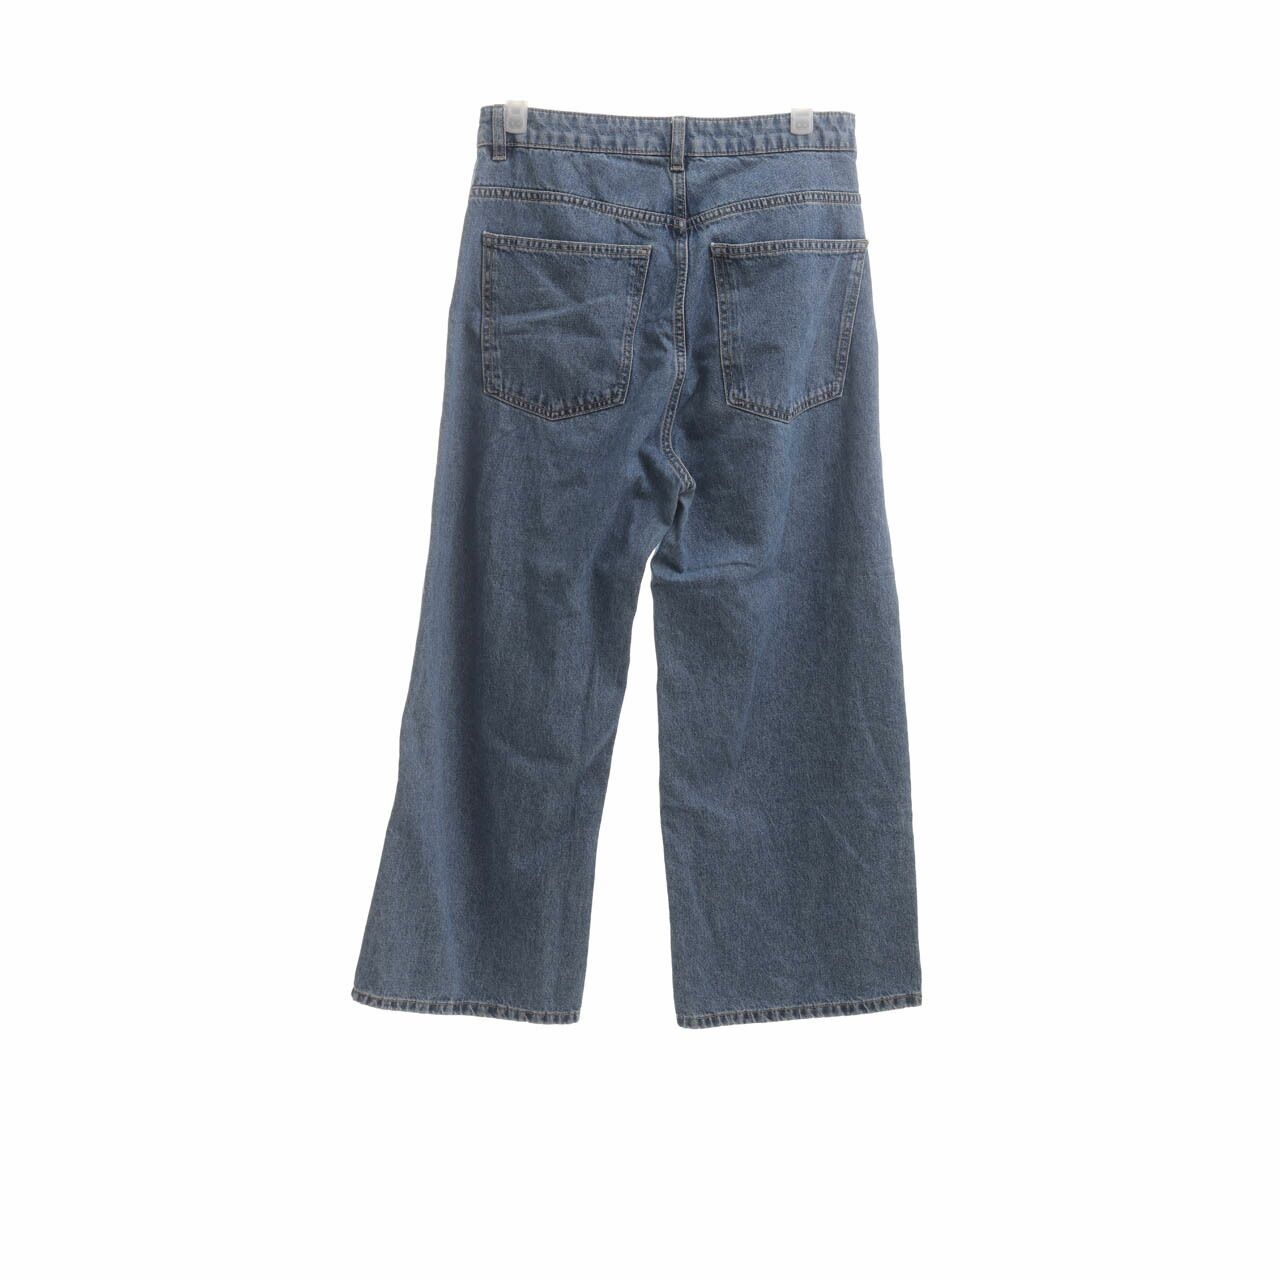 H&M Blue Washed Denim Culottes Long Pants